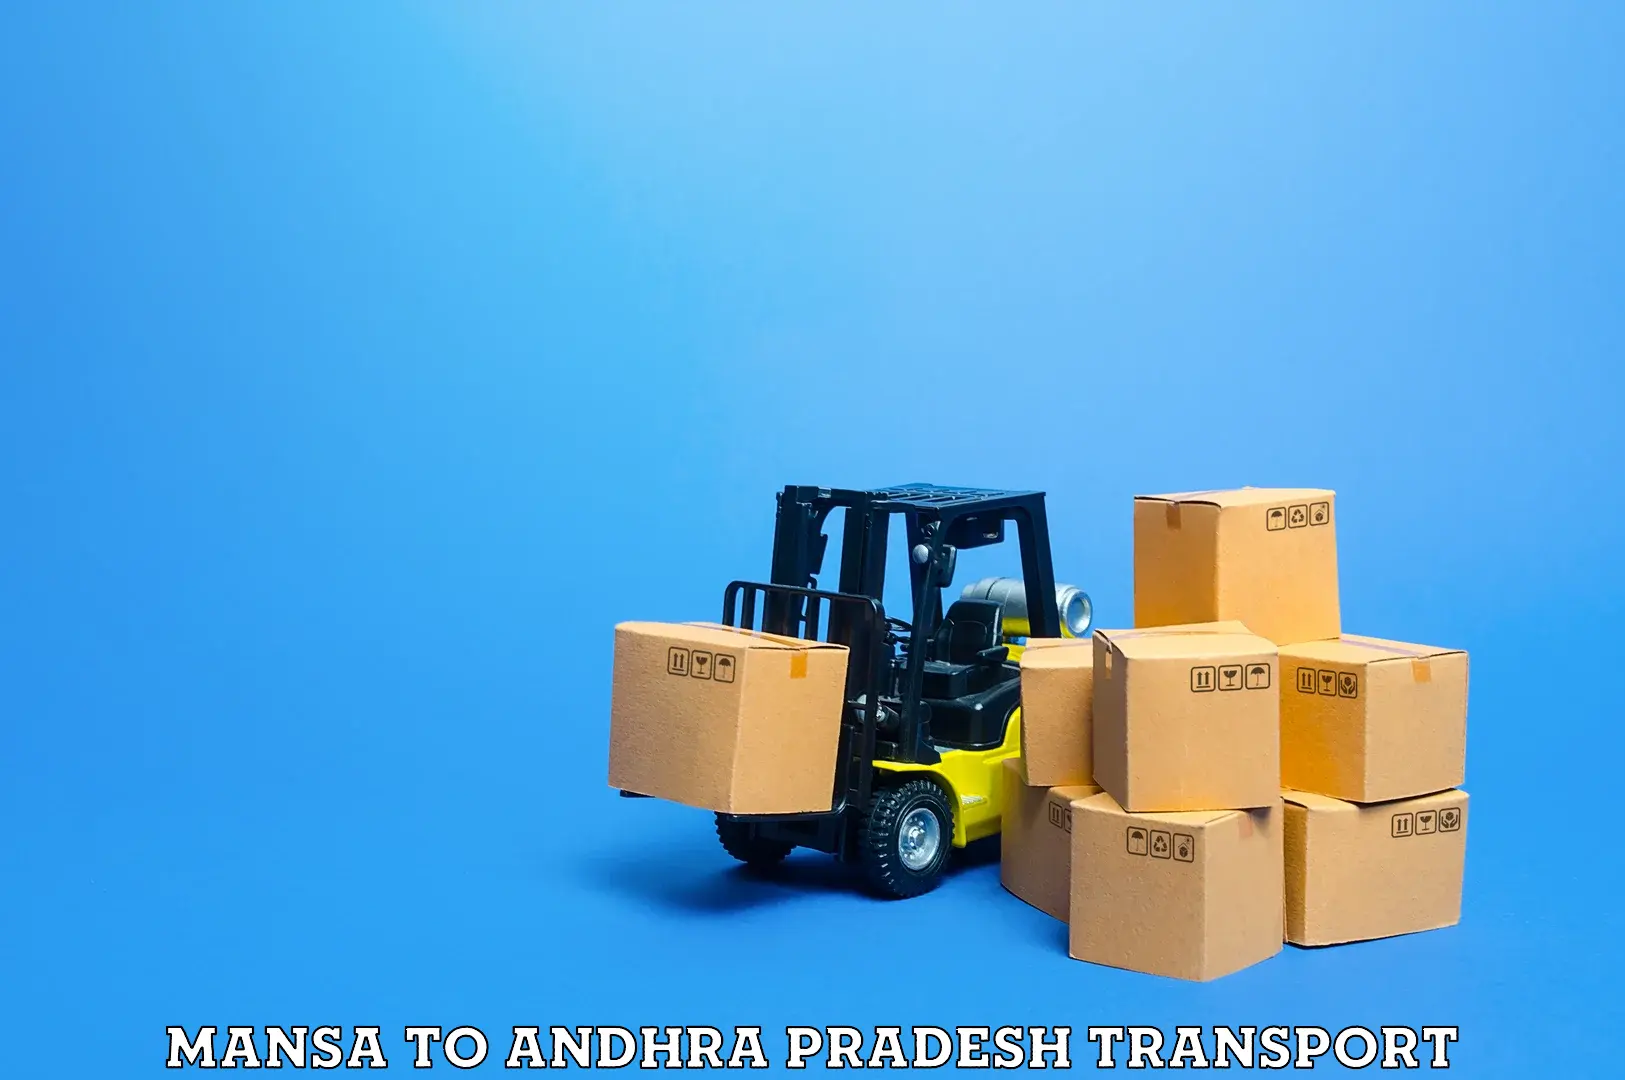 Sending bike to another city Mansa to Andhra Pradesh